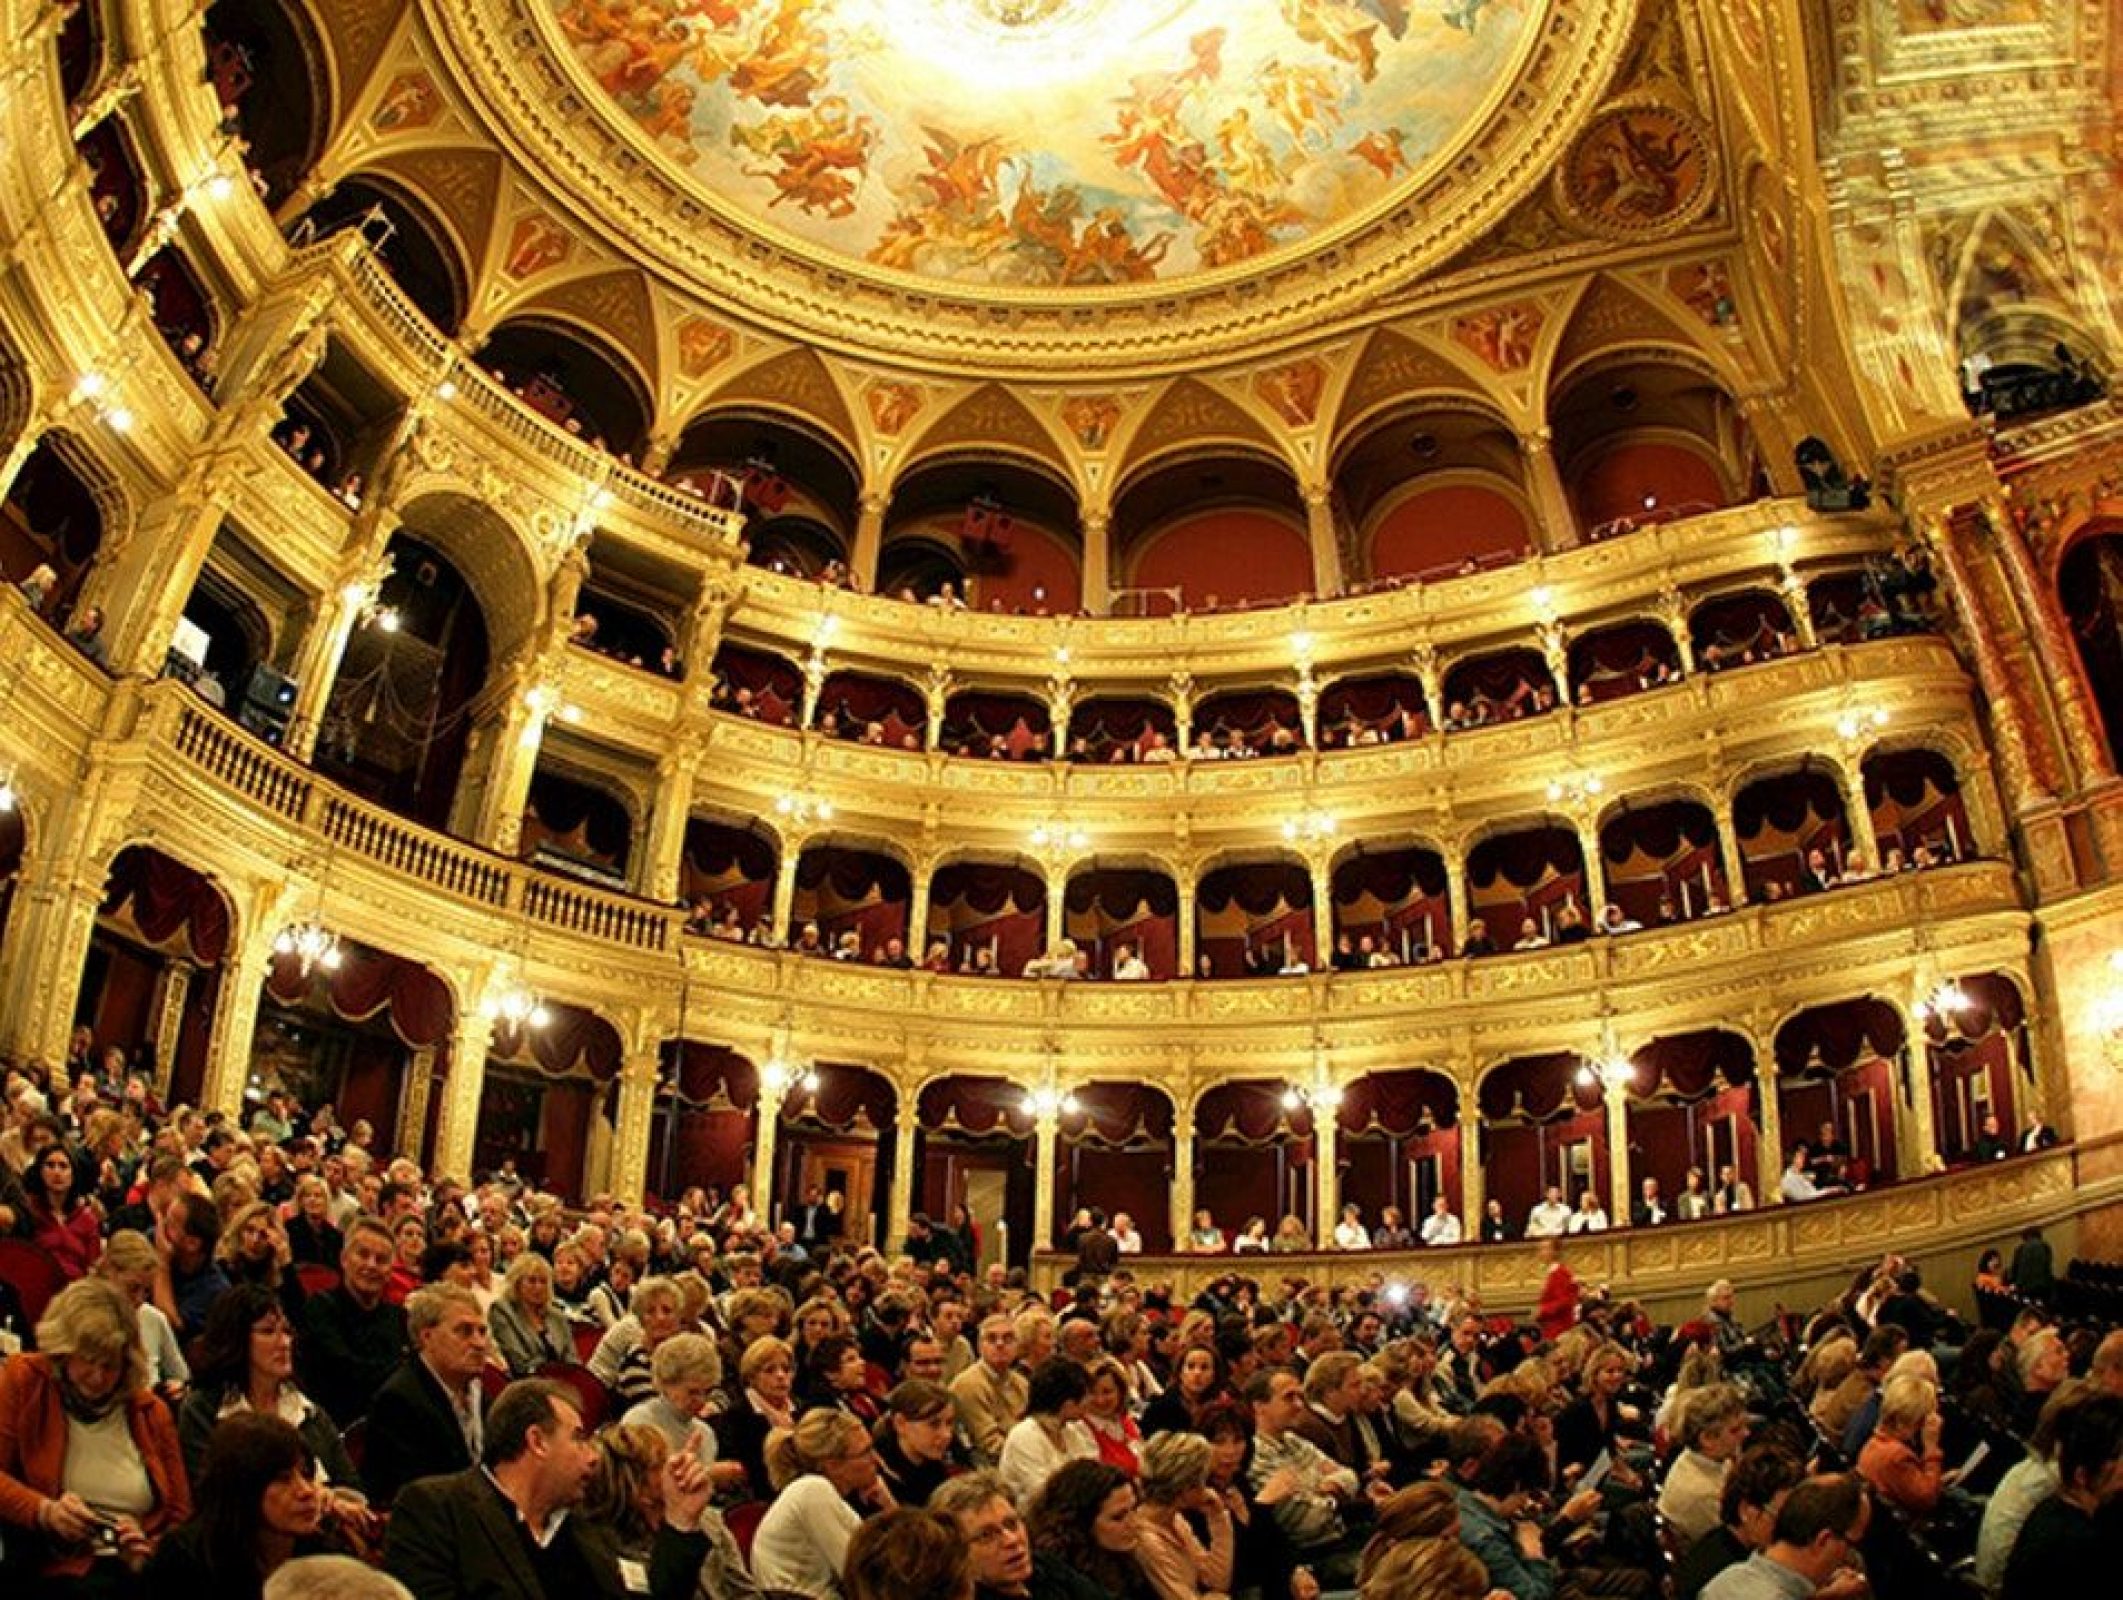 10 Captivating Opera House Interiors from Around the World